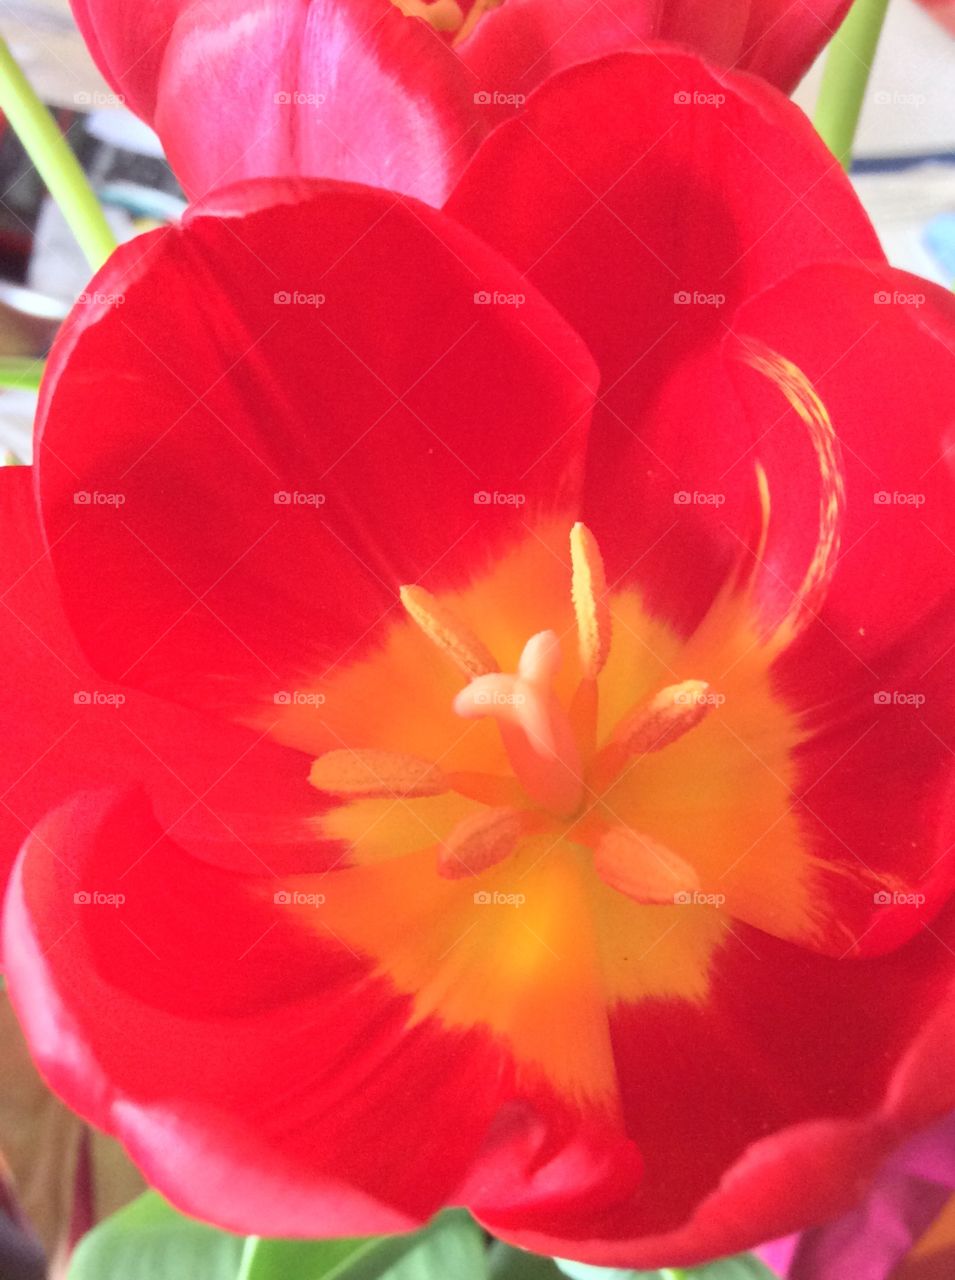 Light of my Tulip
